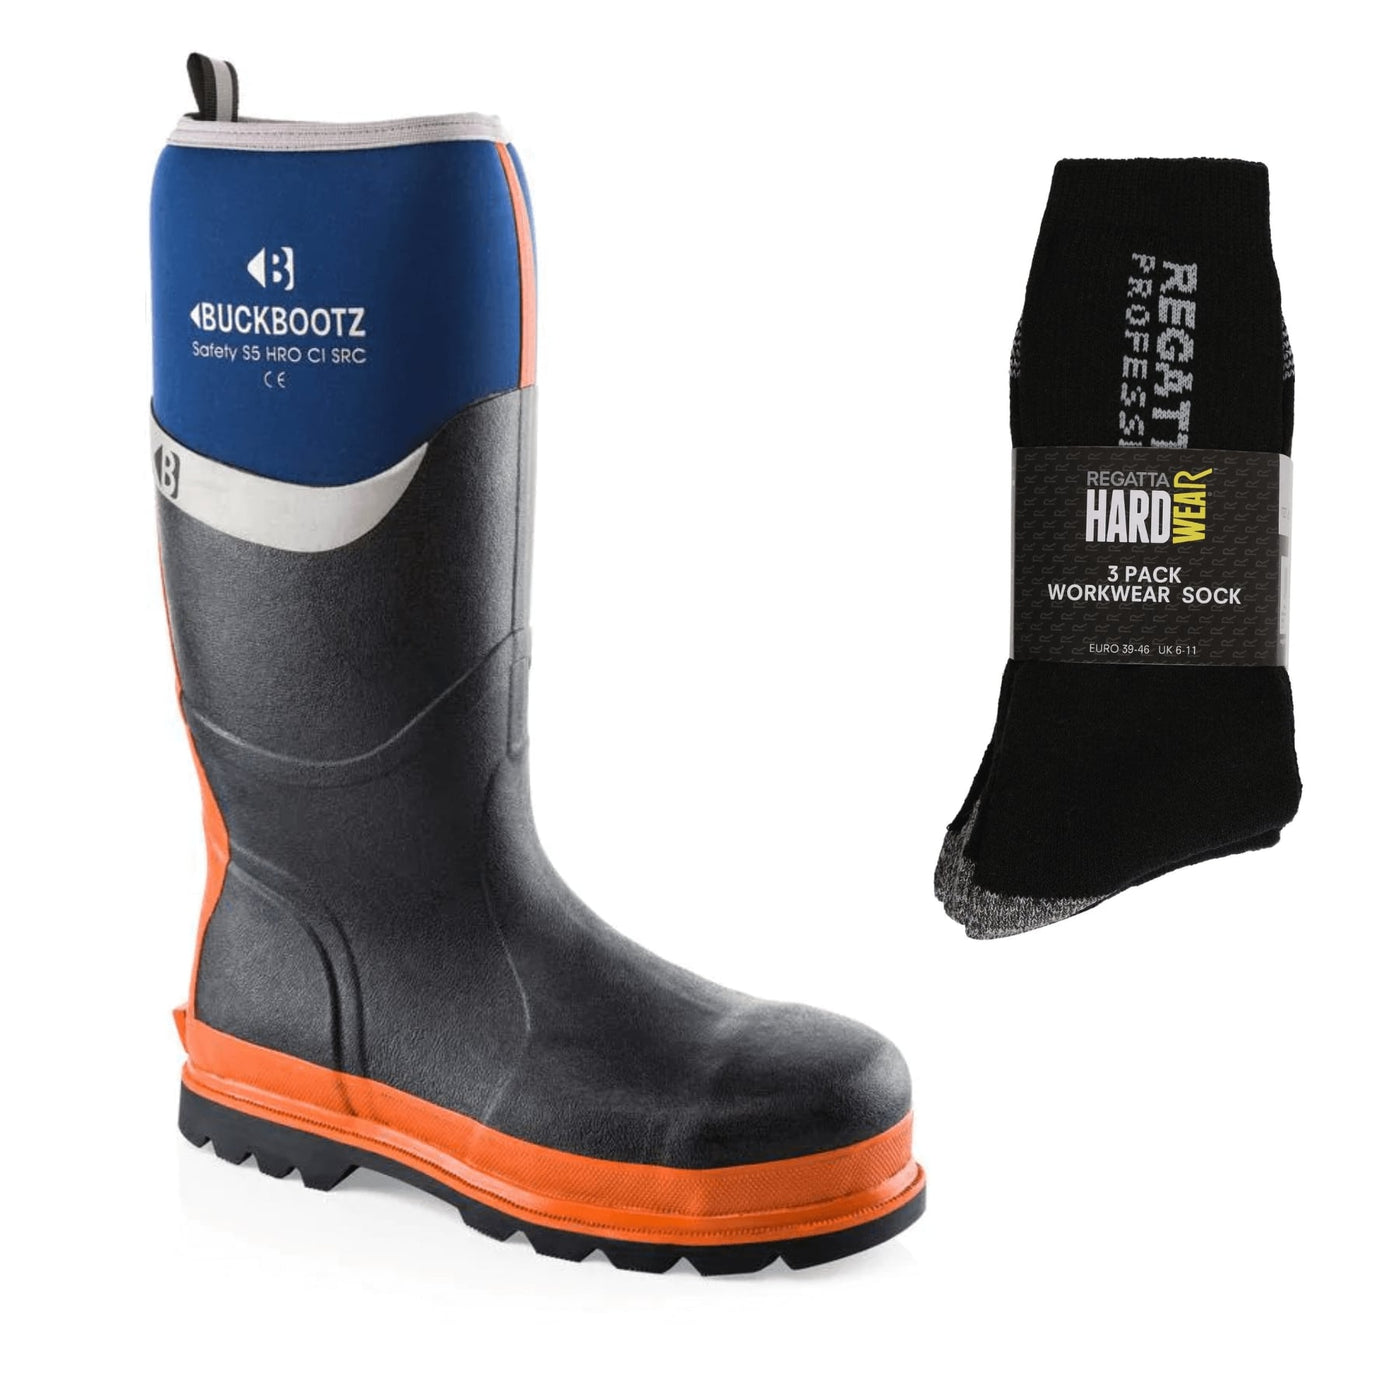 Buckbootz BBZ6000 Special Offer Pack - Buckler Insulated Neoprene Safety Wellington Boots + 2 Pack Wellies Socks